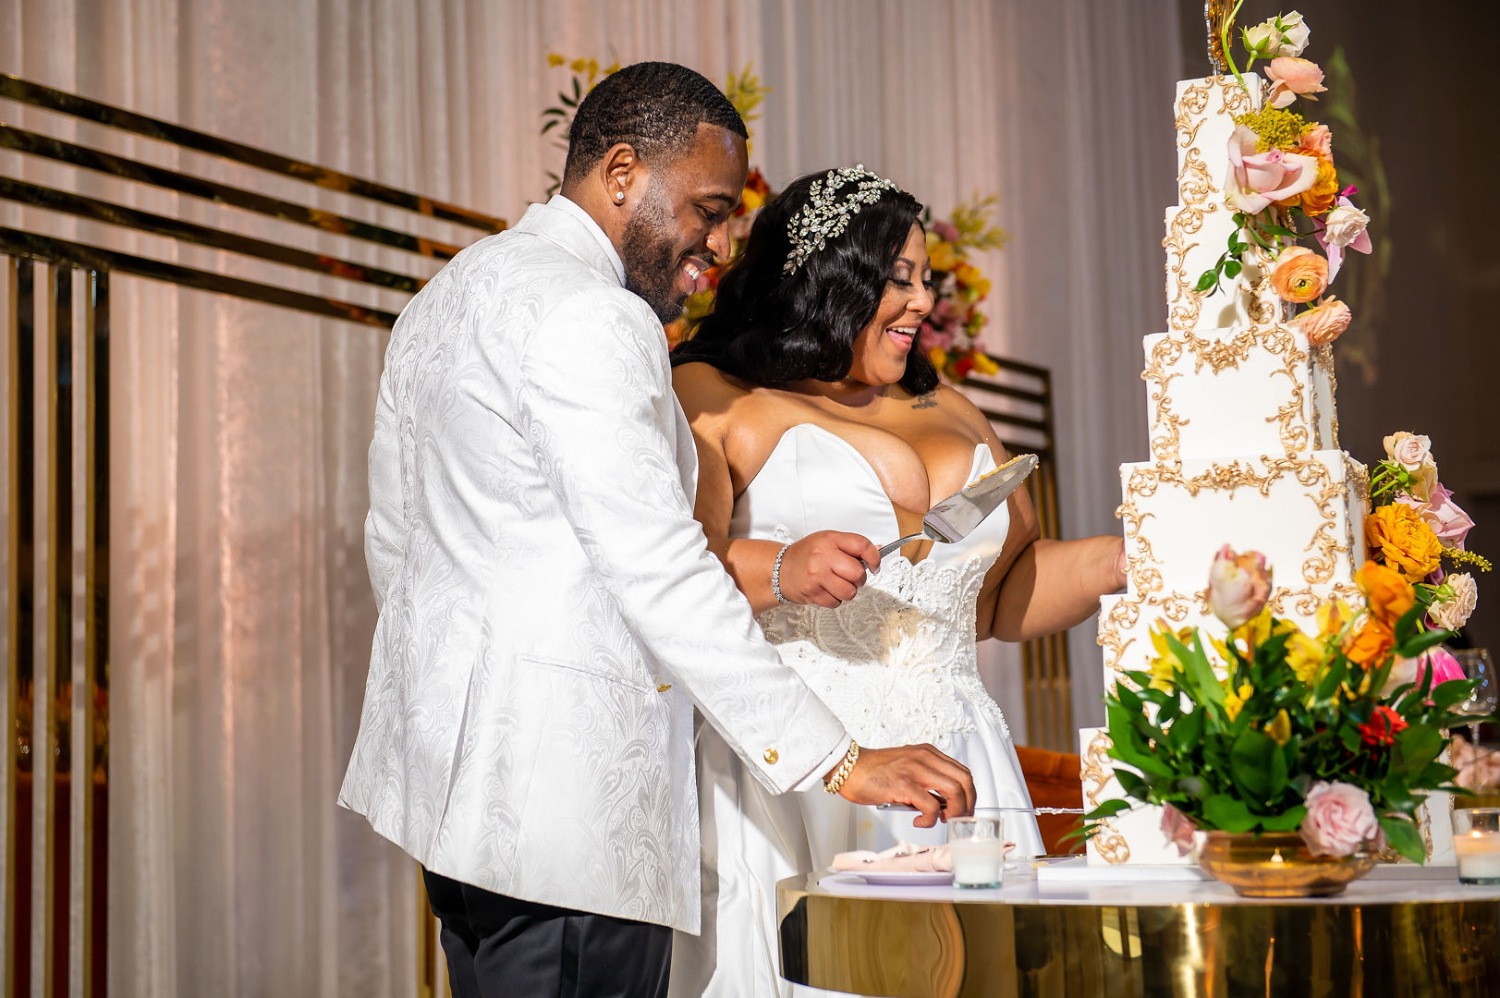 bride and groom cut 6 tier cake